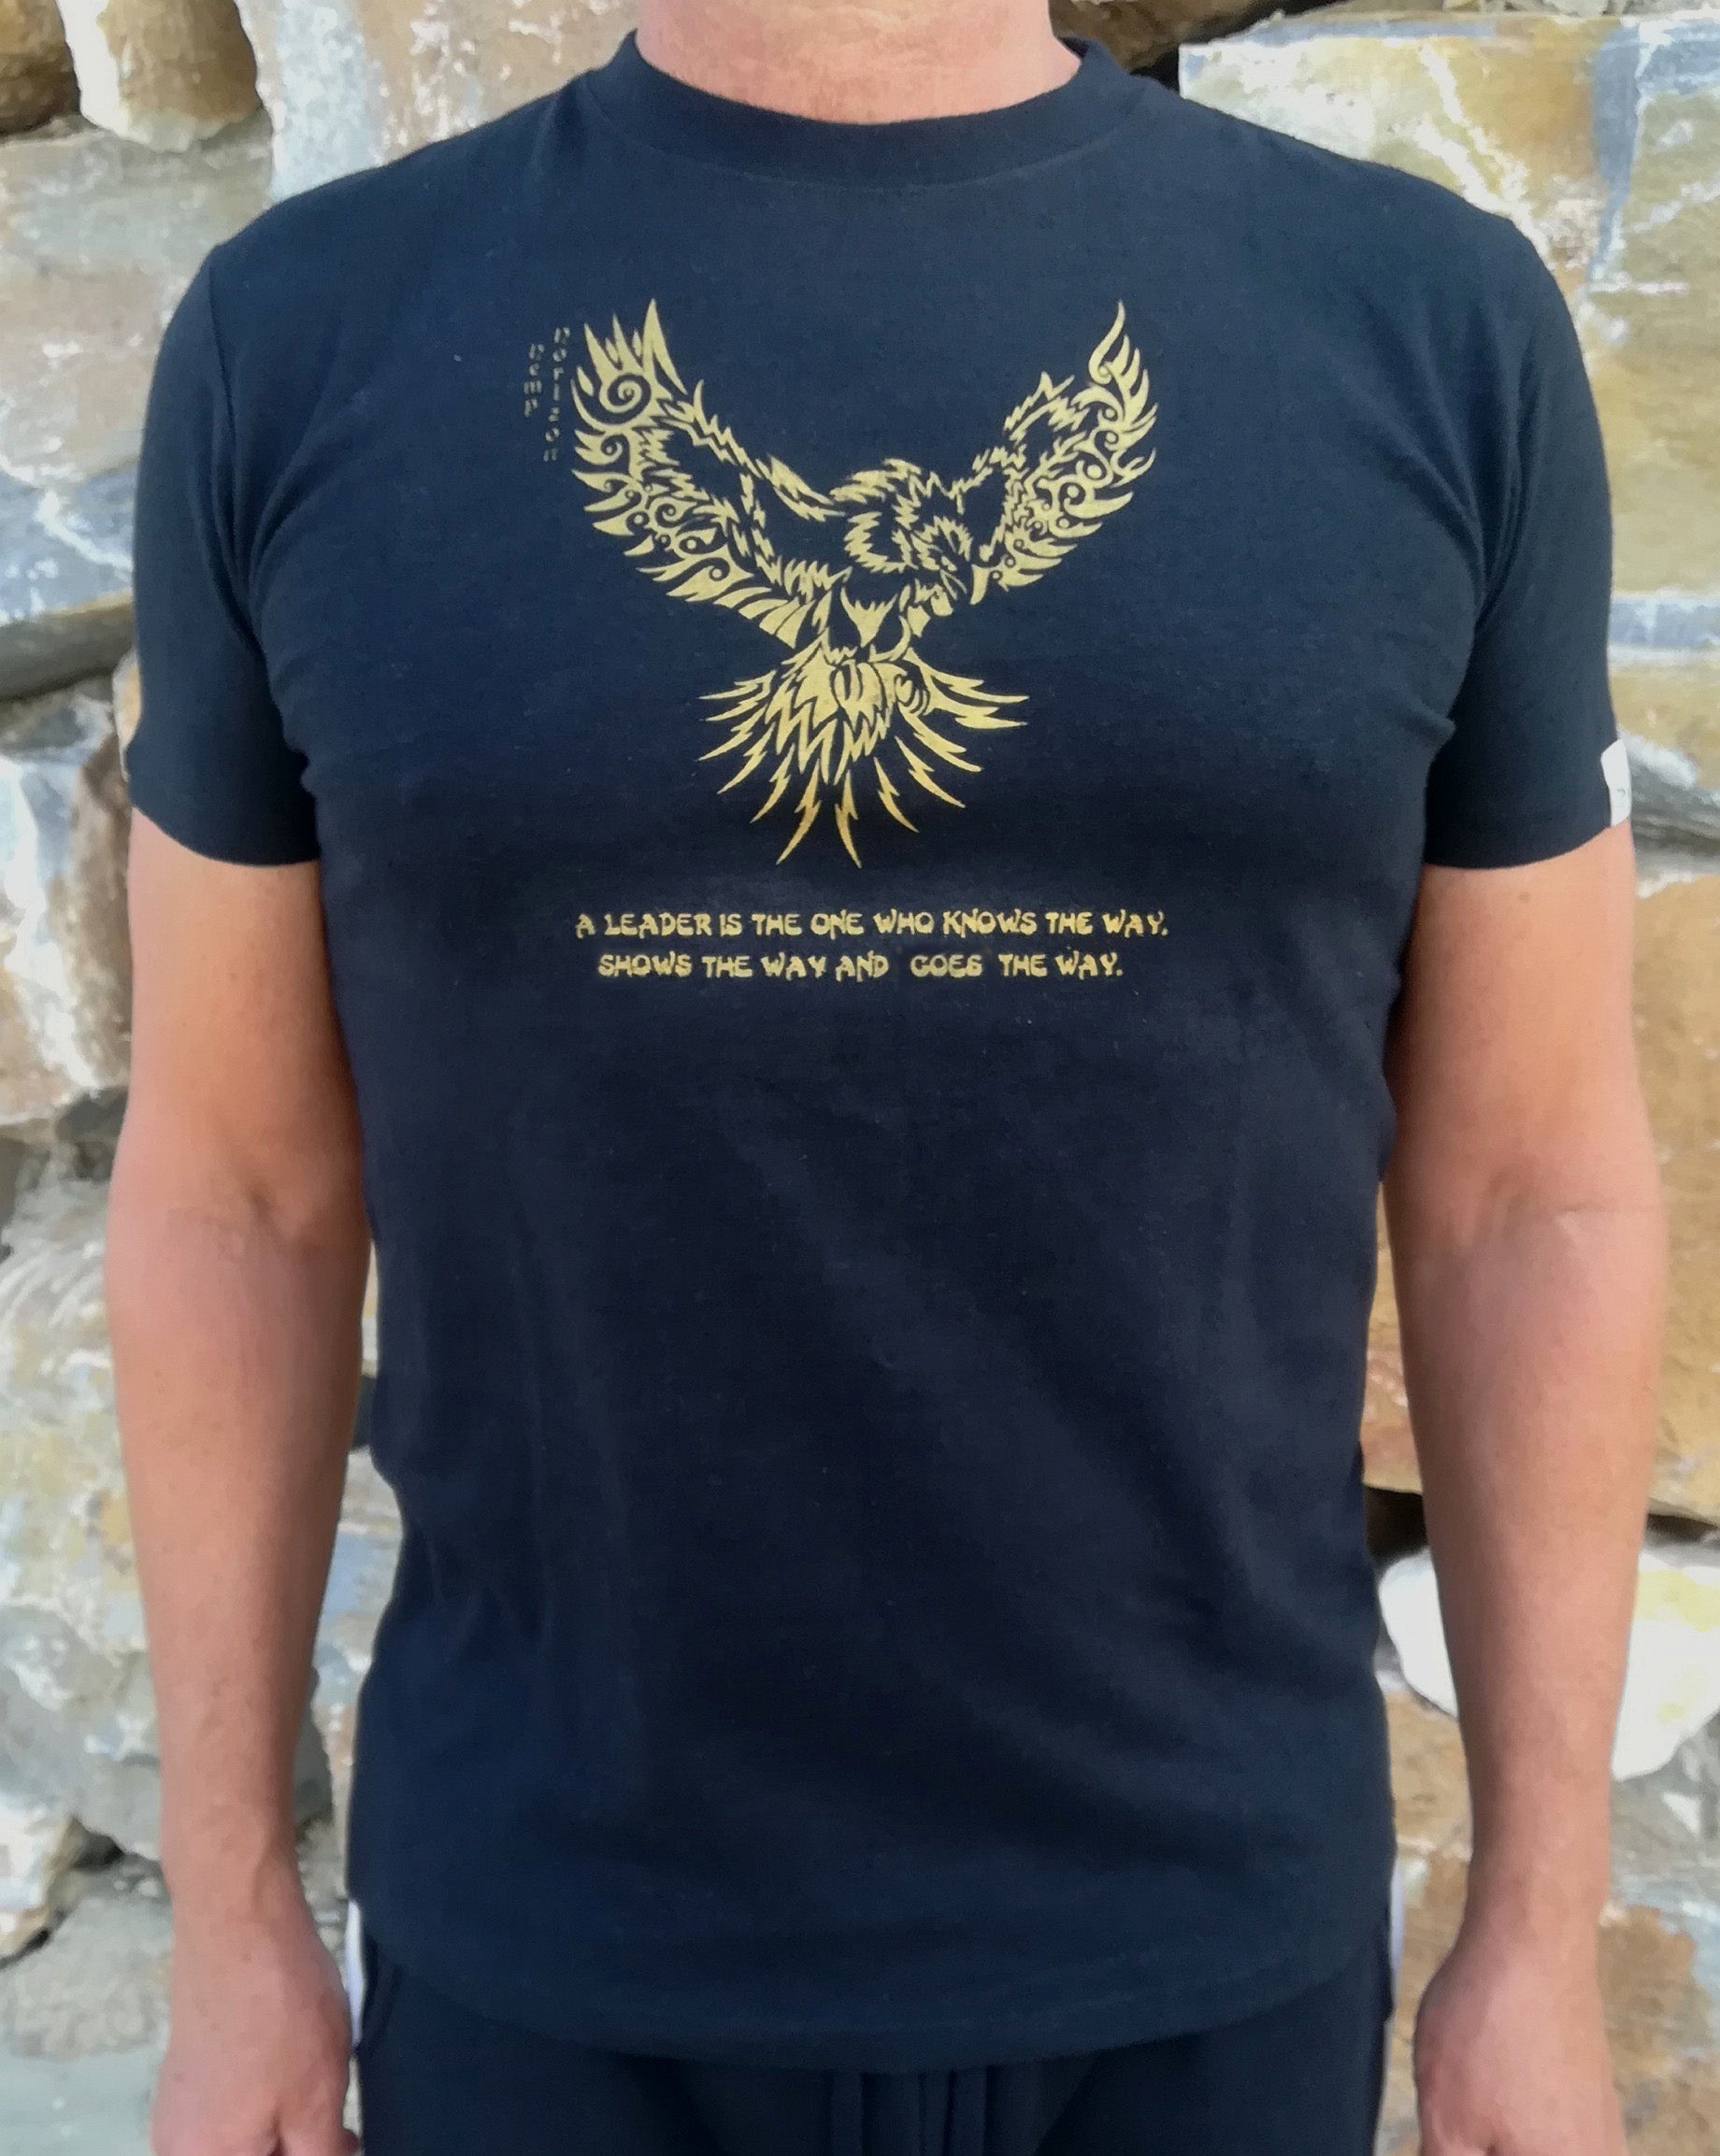 Hemp Organic Cotton T-Shirt With Eagle Print - Hemp Horizon